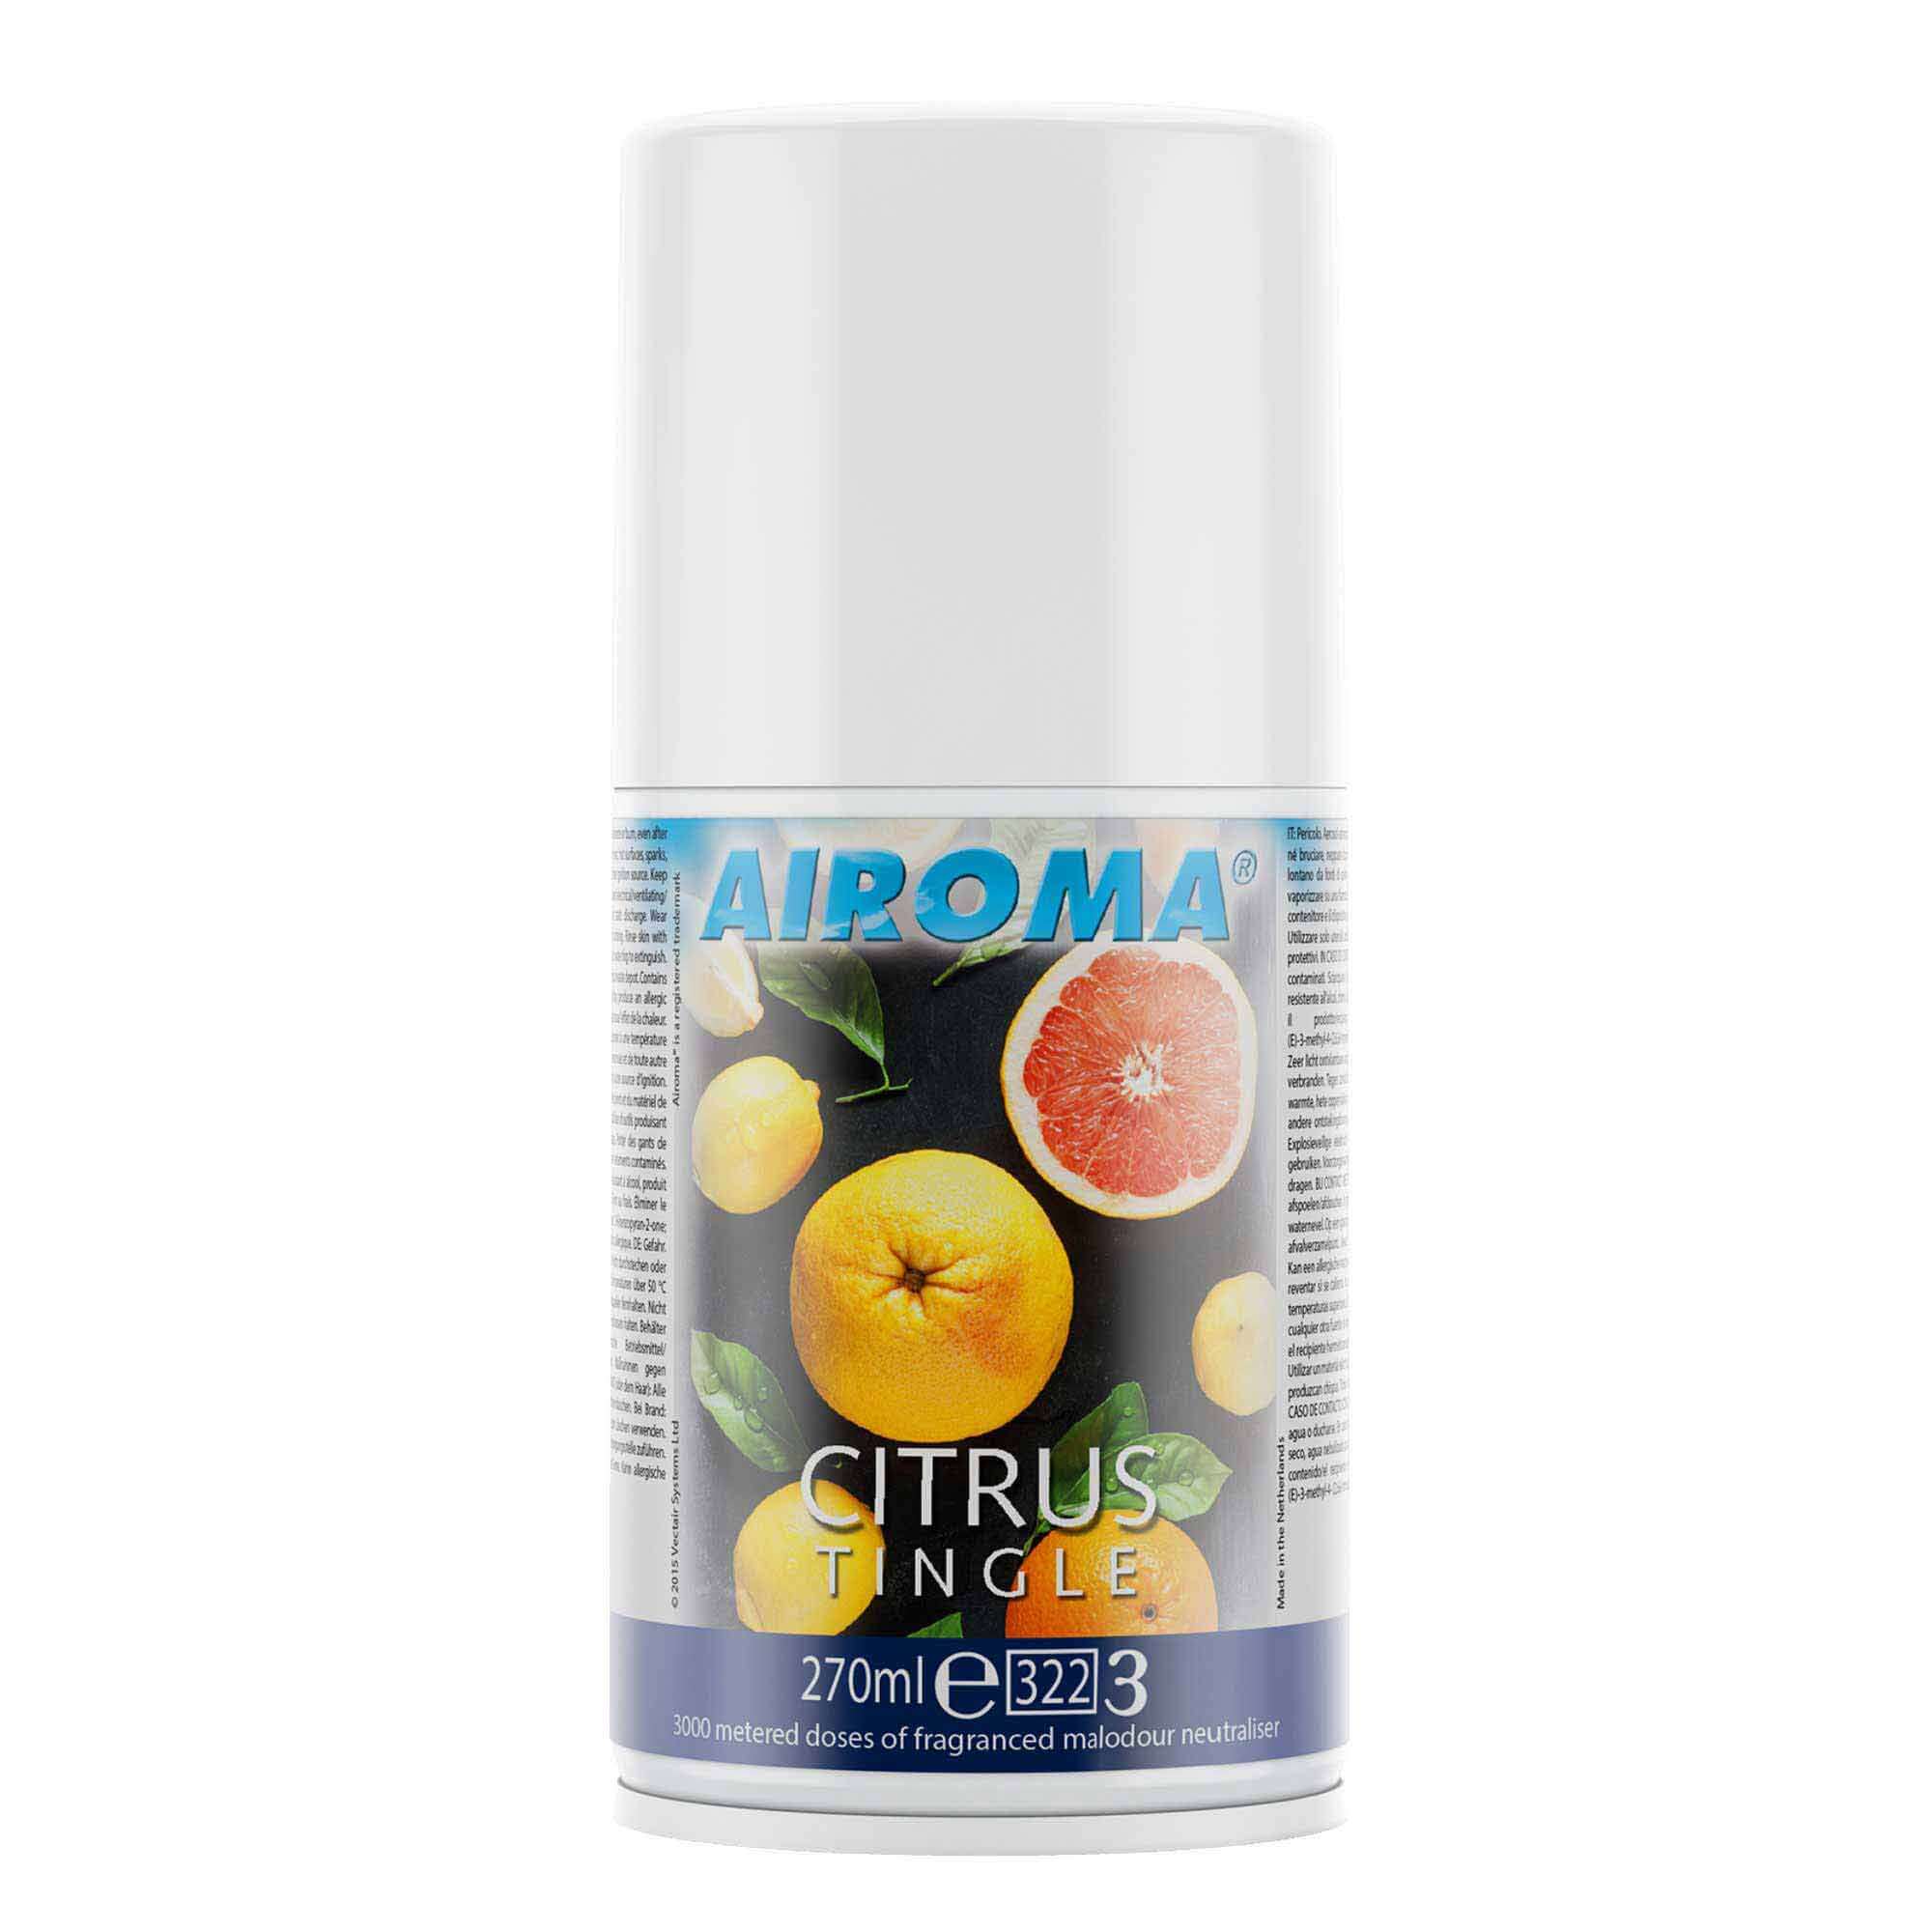 Airoma Air Freshener Refills 270ml Citrus Tingle